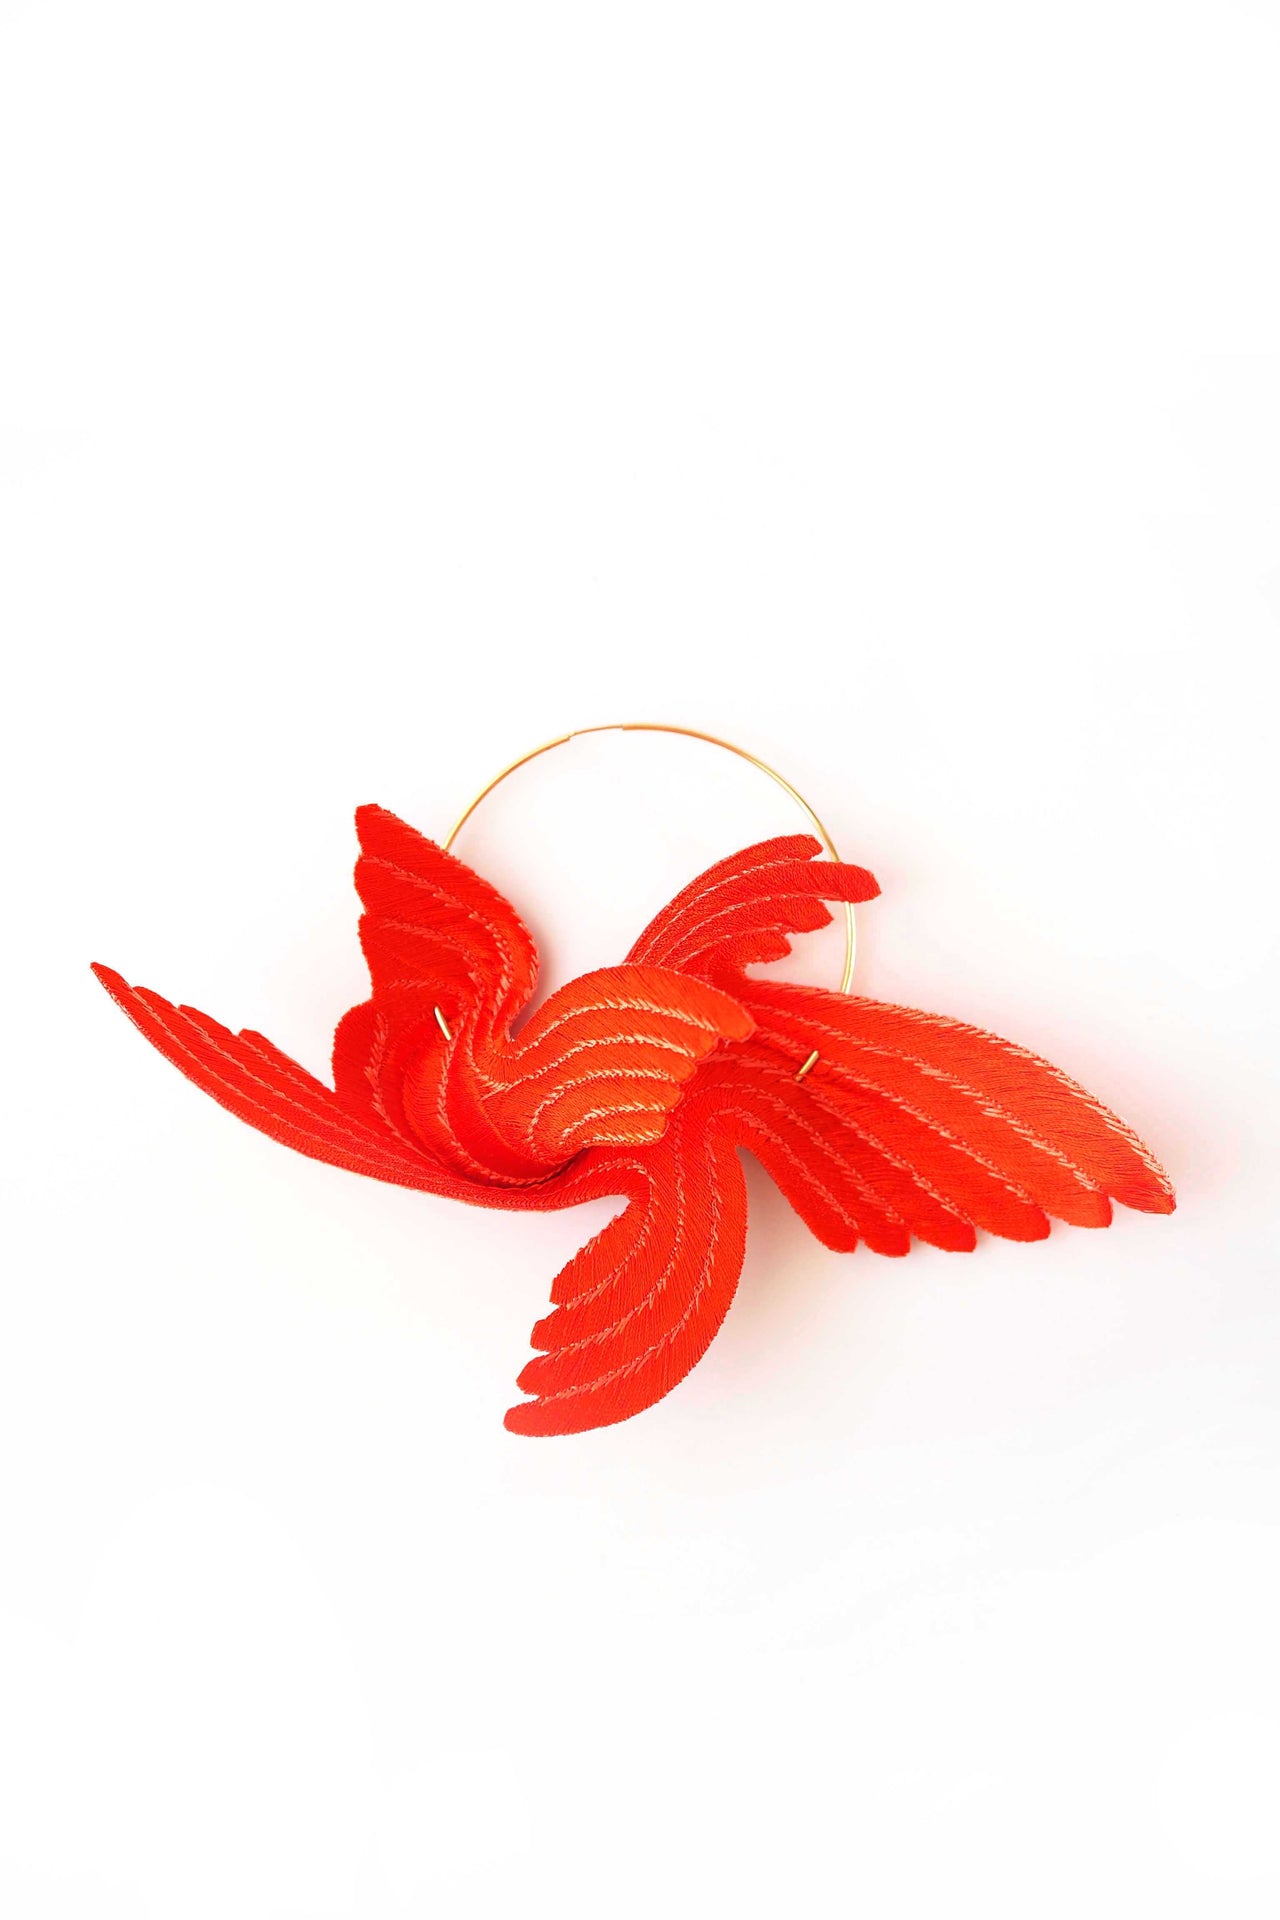 ARRO / JOY “LITTLE BIRD” / 耳環 / 橙色